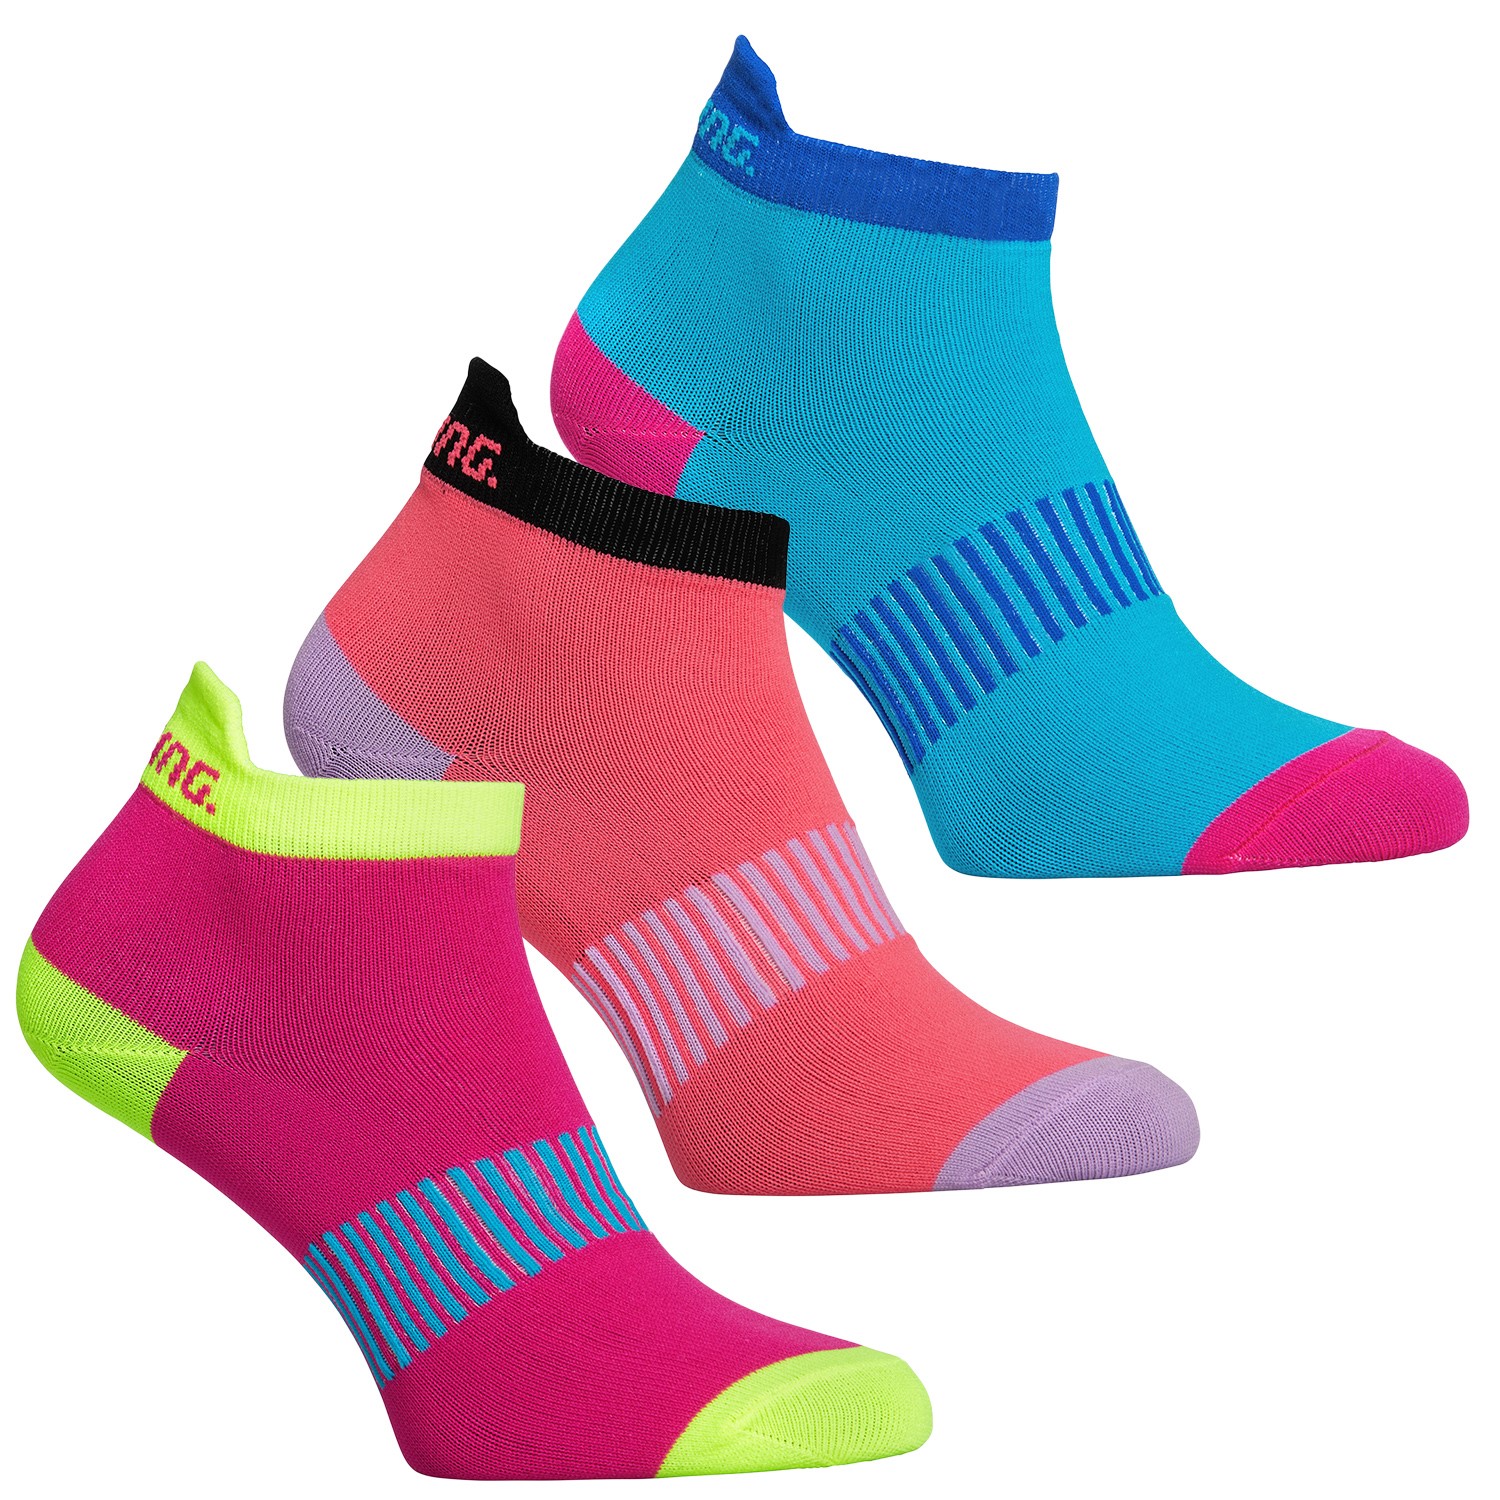 Salming Performance Ankle Socks